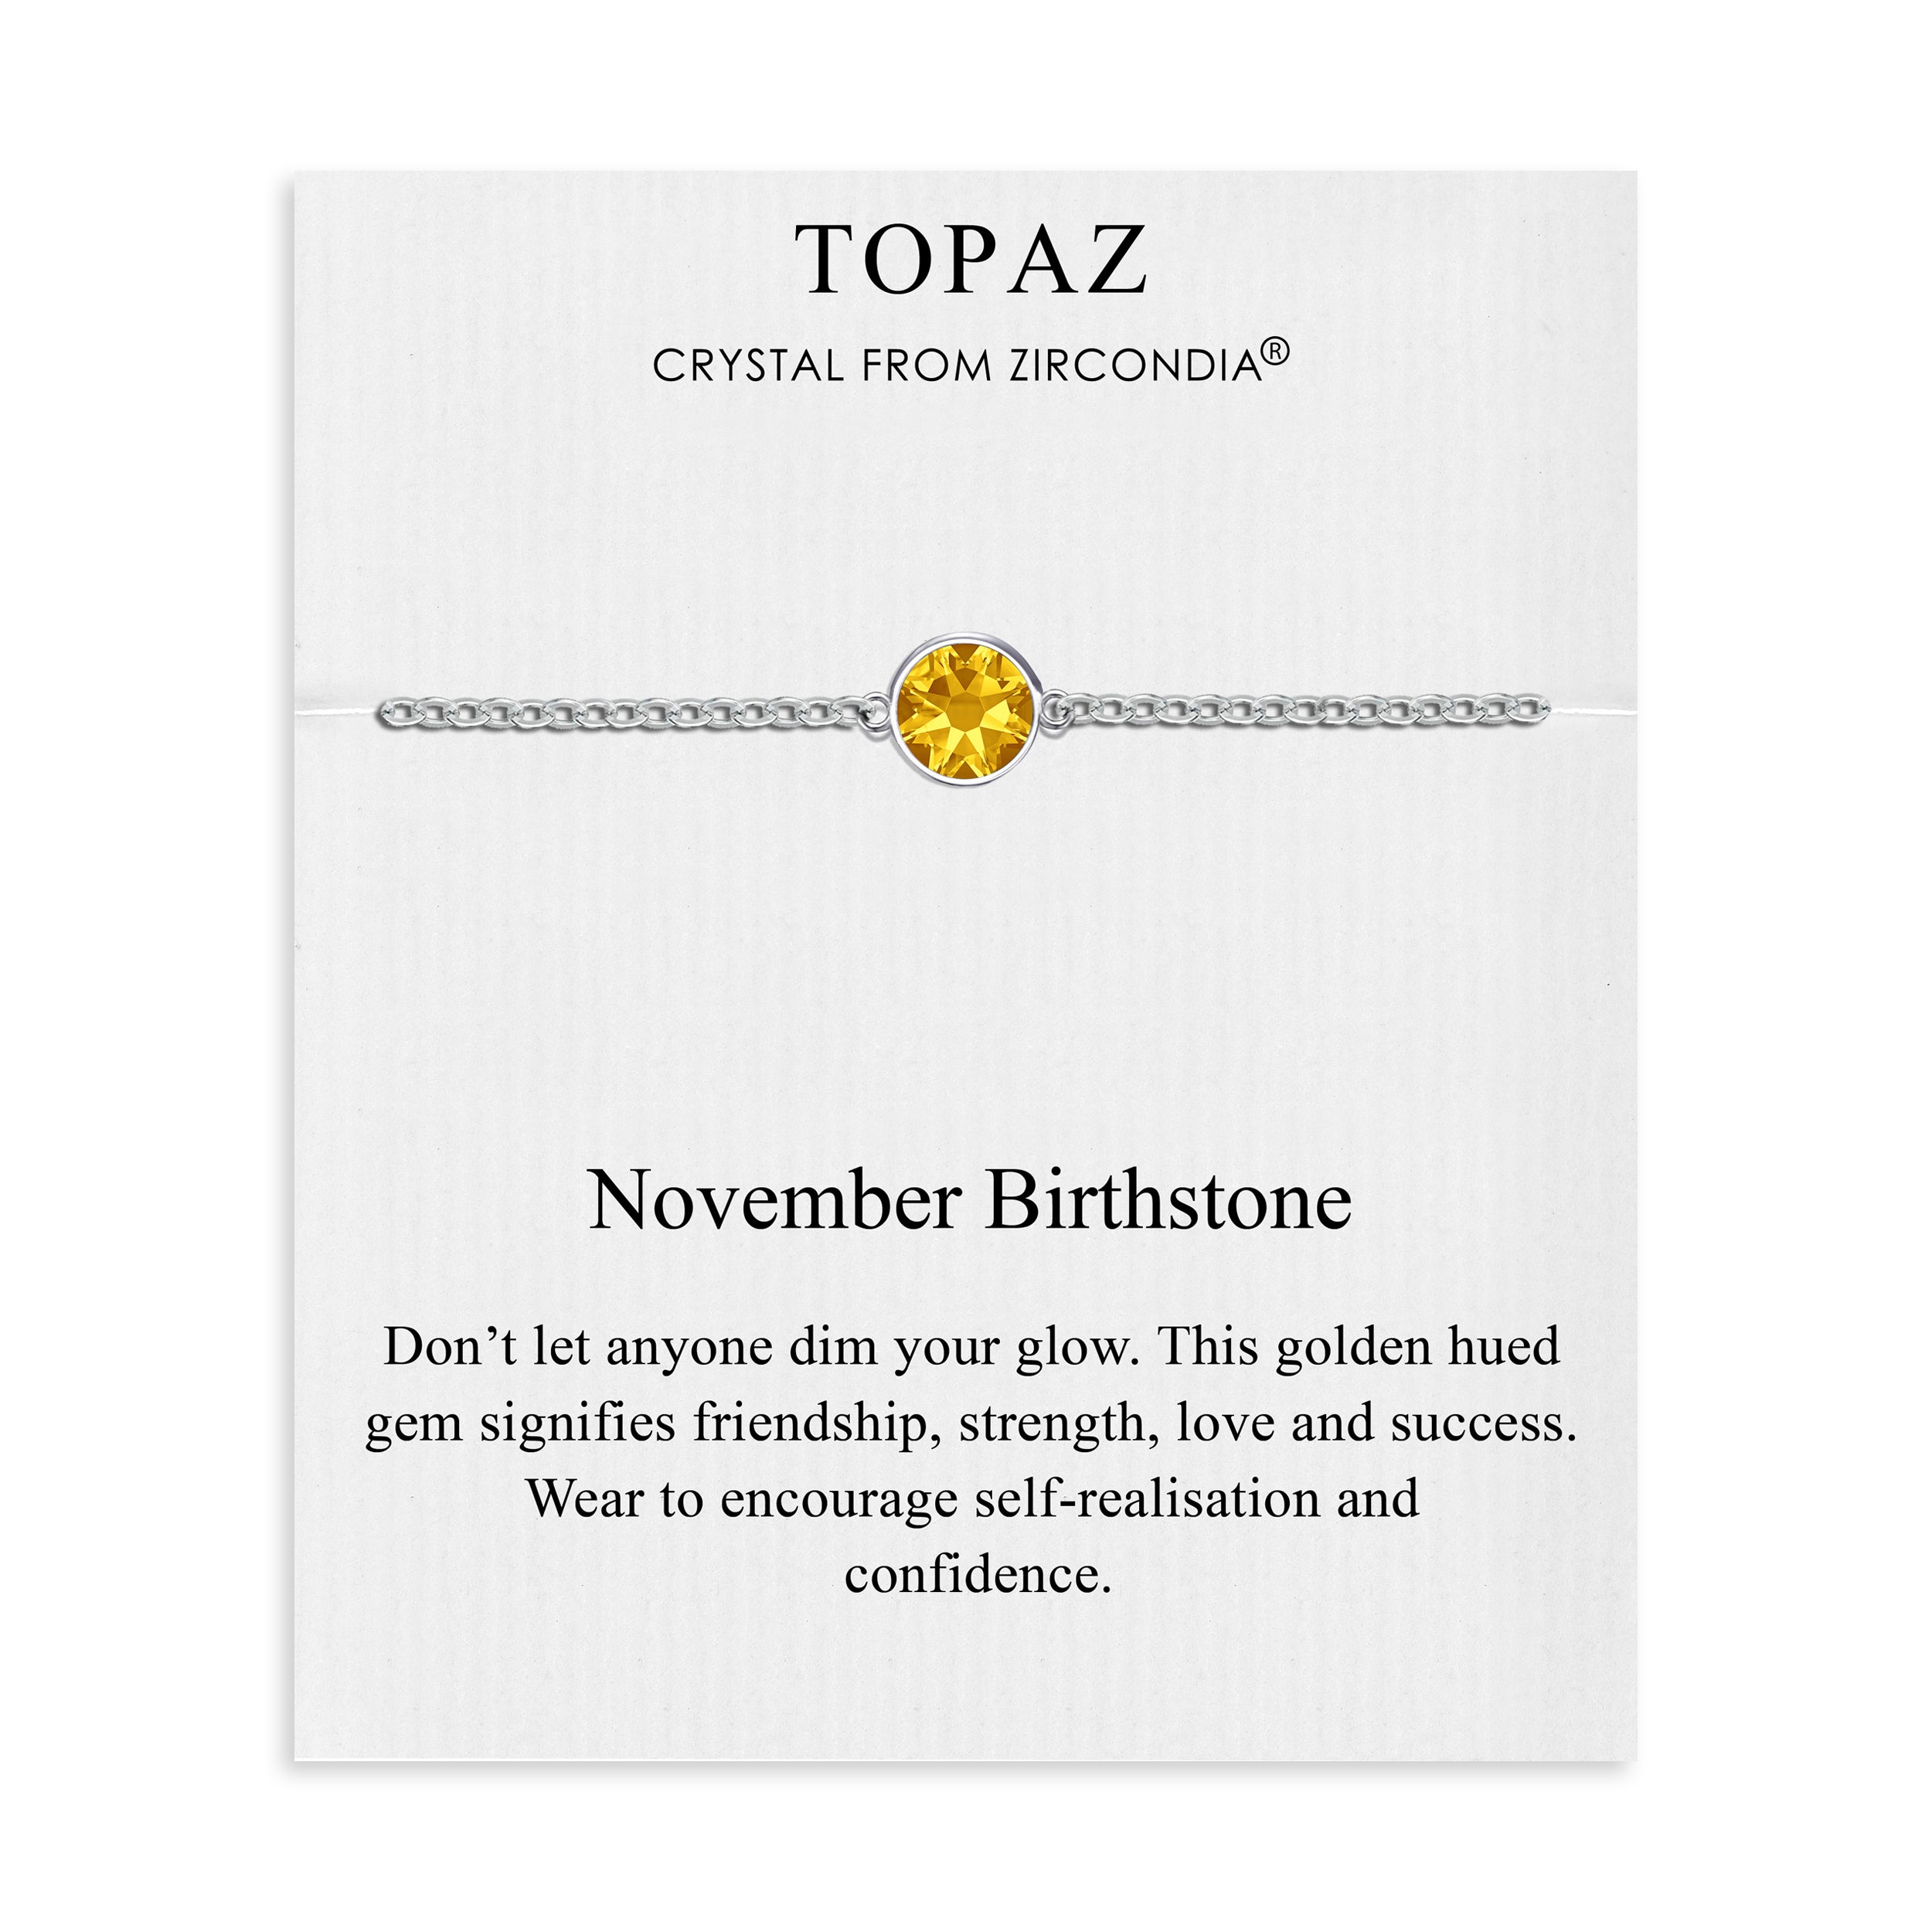 November (Topaz) Birthstone Anklet Created with Zircondia® Crystals by Philip Jones Jewellery